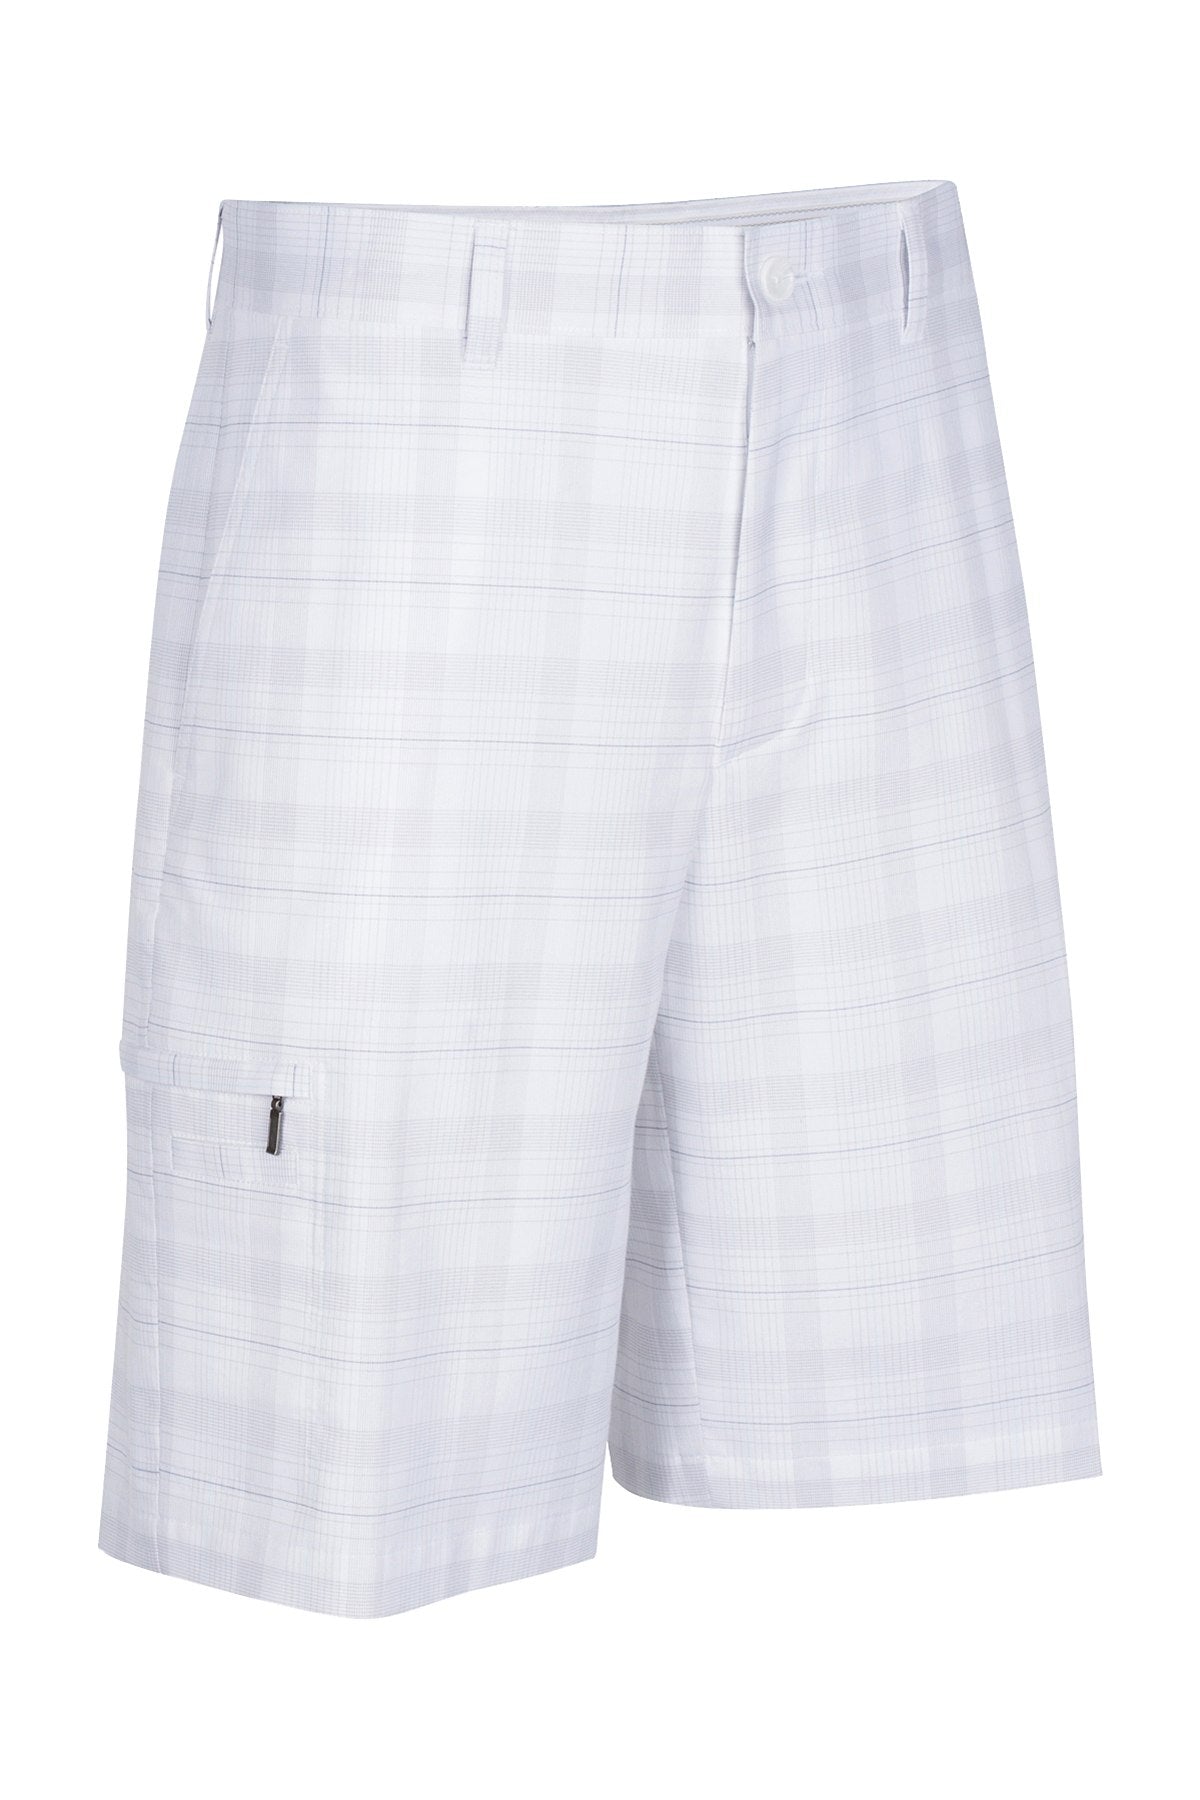 Greg Norman for Tasso Elba Bright-White Tech Plaid Golf Short